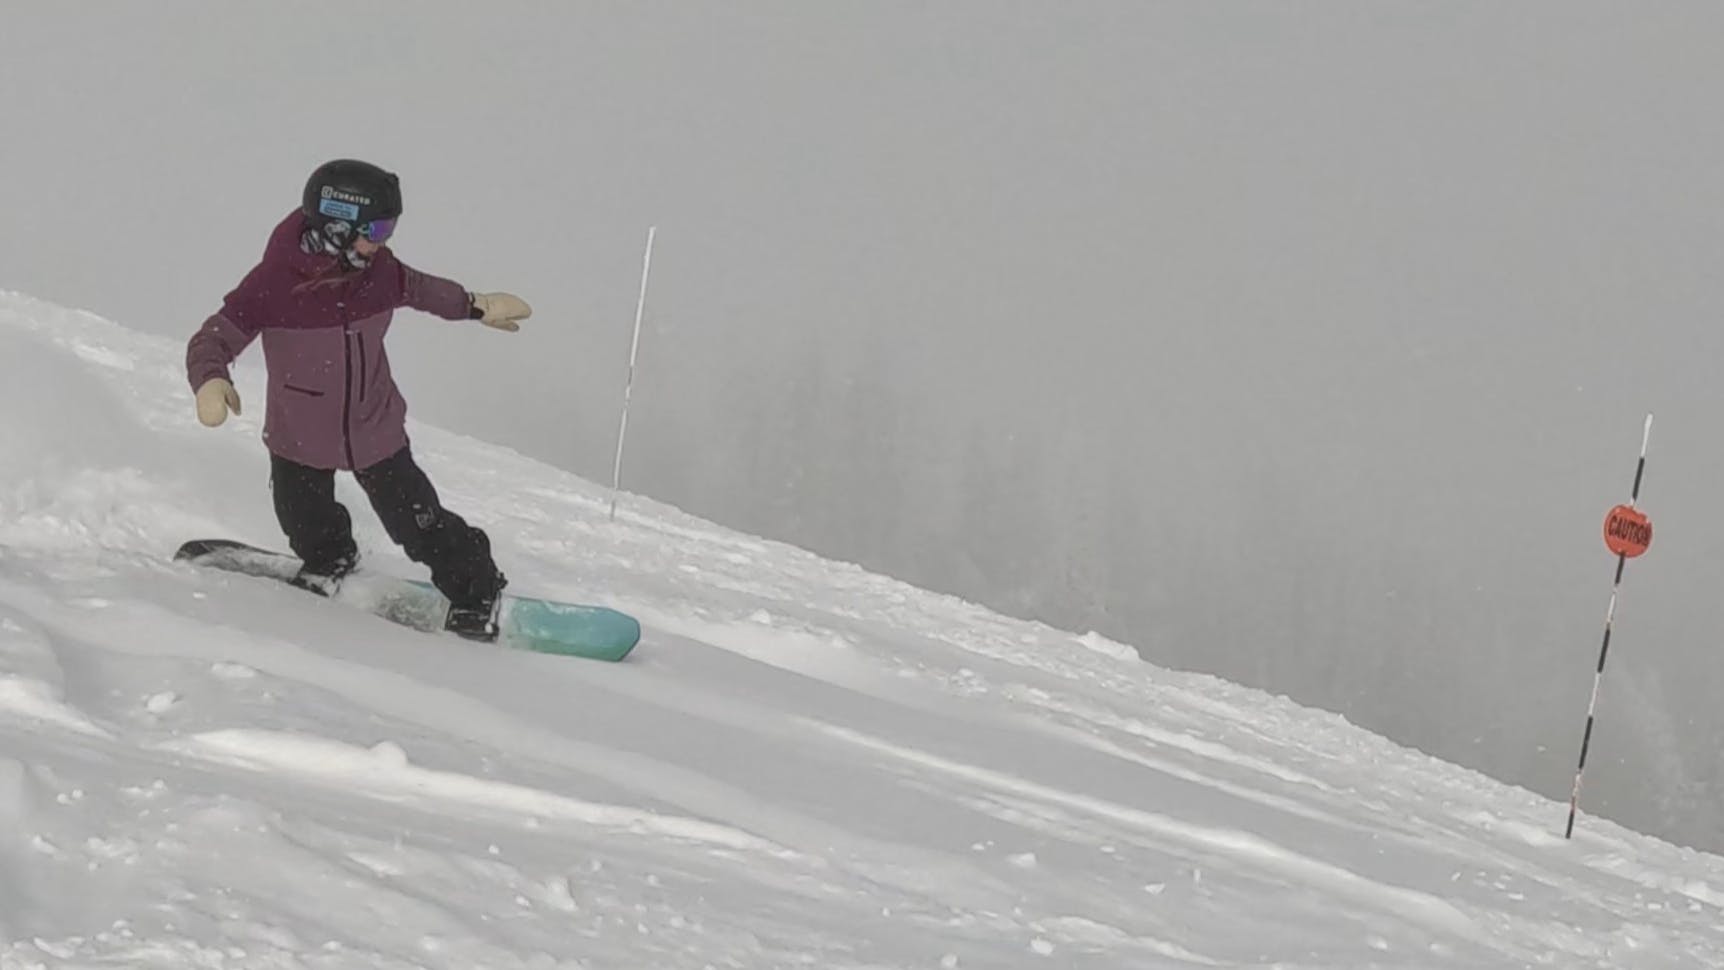 Snowboarding Expert Arielle Busch testing the Bataleon ThunderStorm snowboard